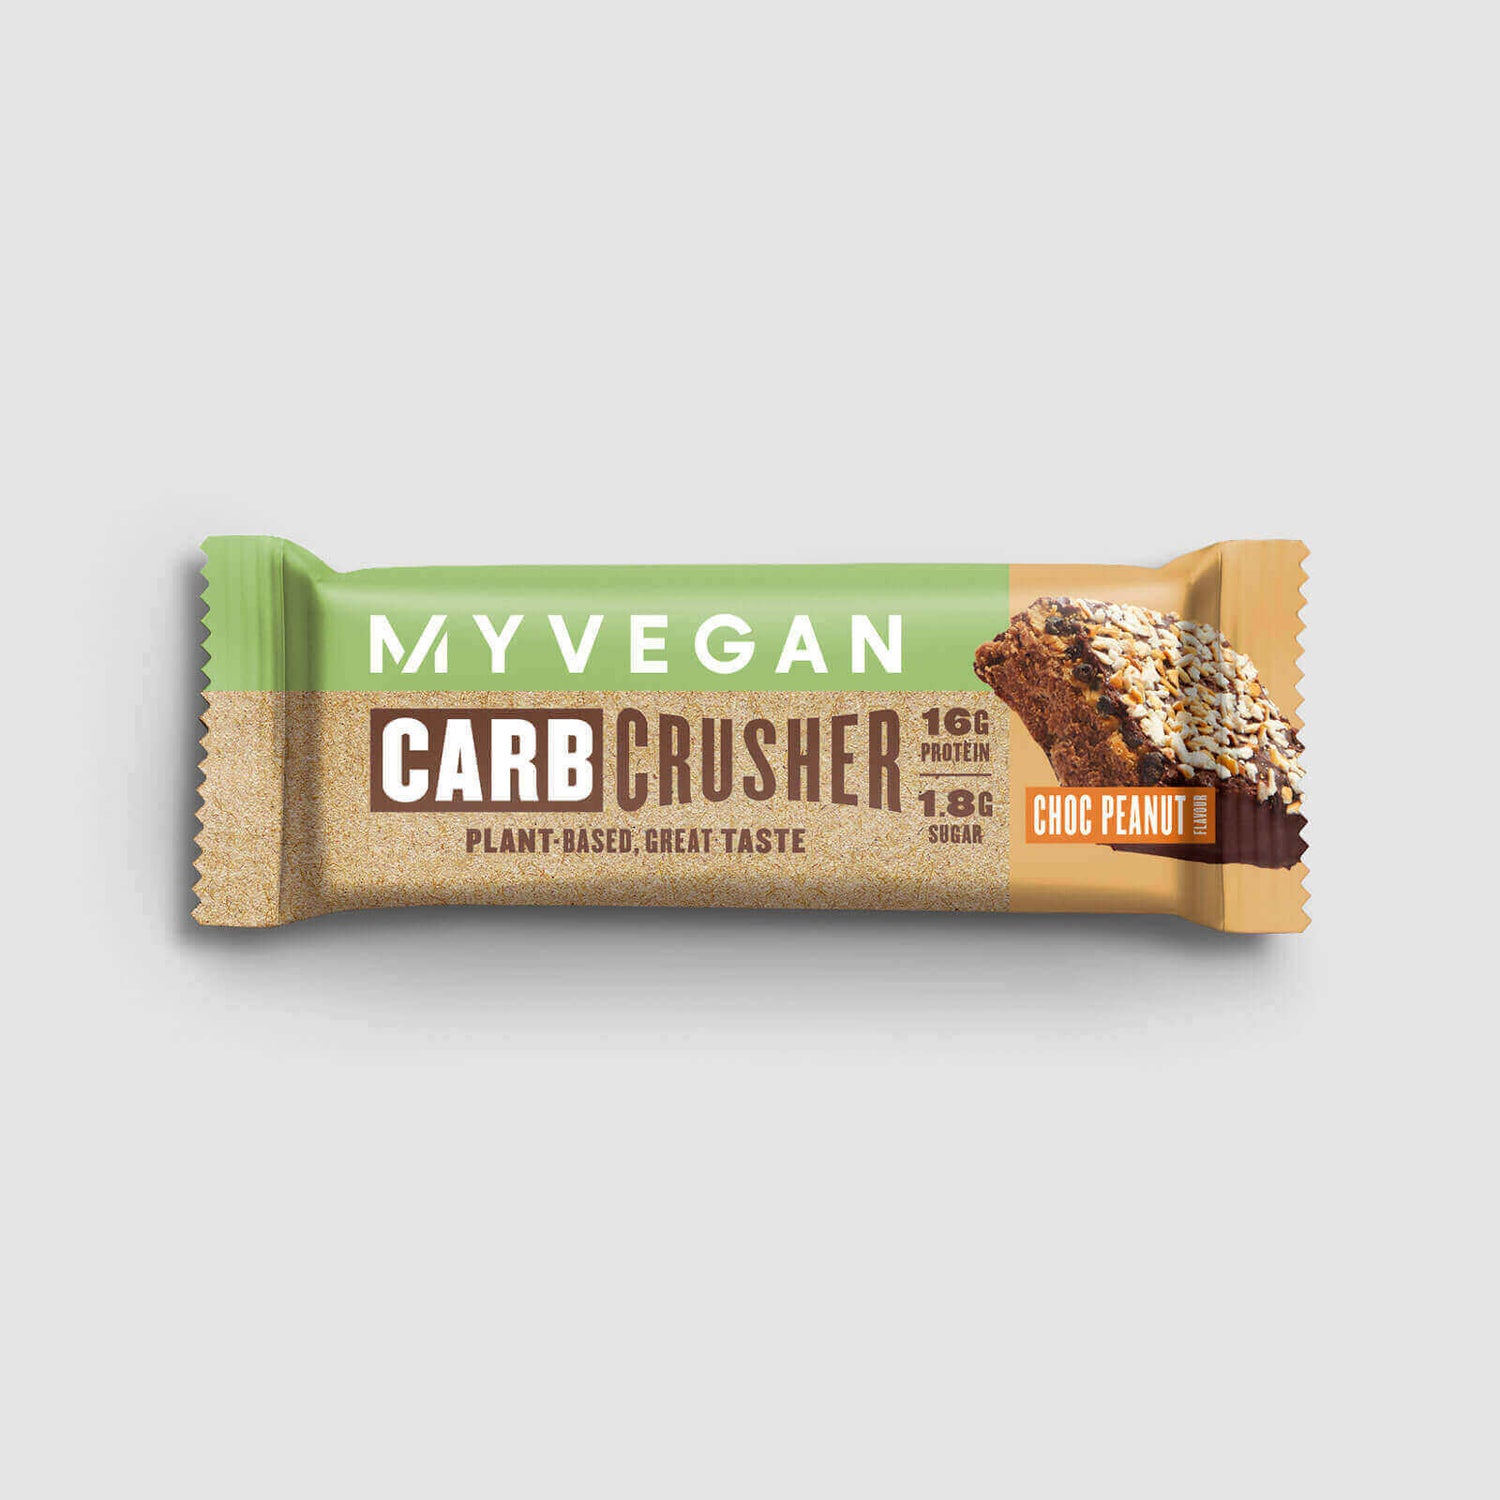 Vegan Carb Crusher (Sample) - 60g - Choc Peanut